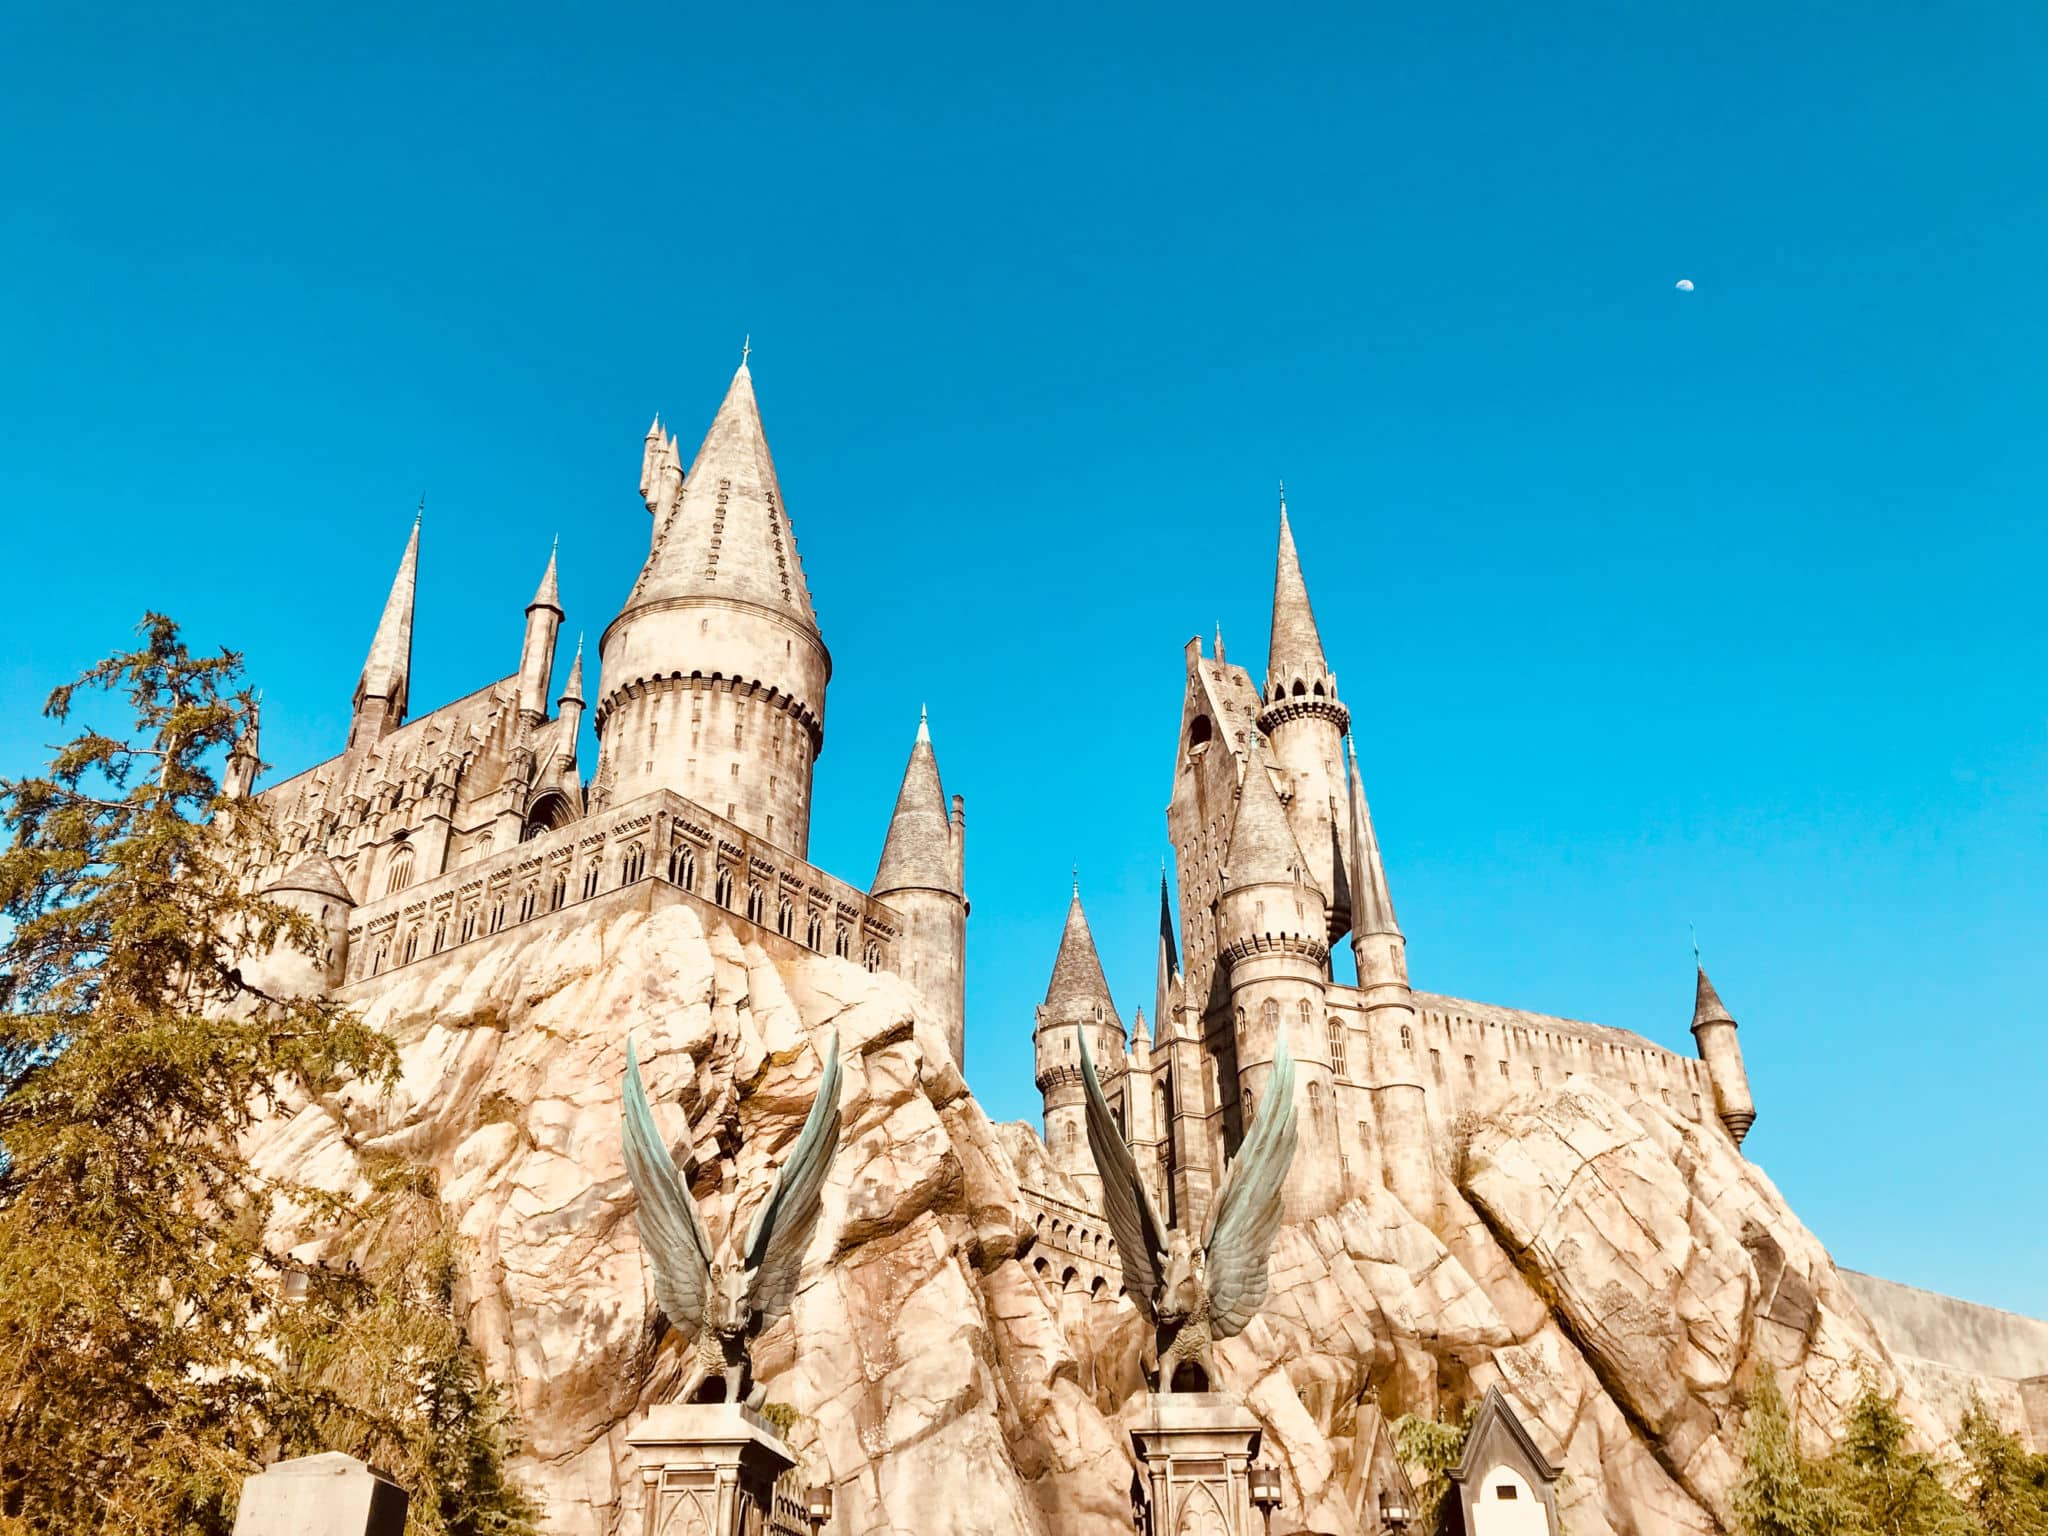 Sleek Hogwarts Water Bottle Arrives at Universal Orlando Resort